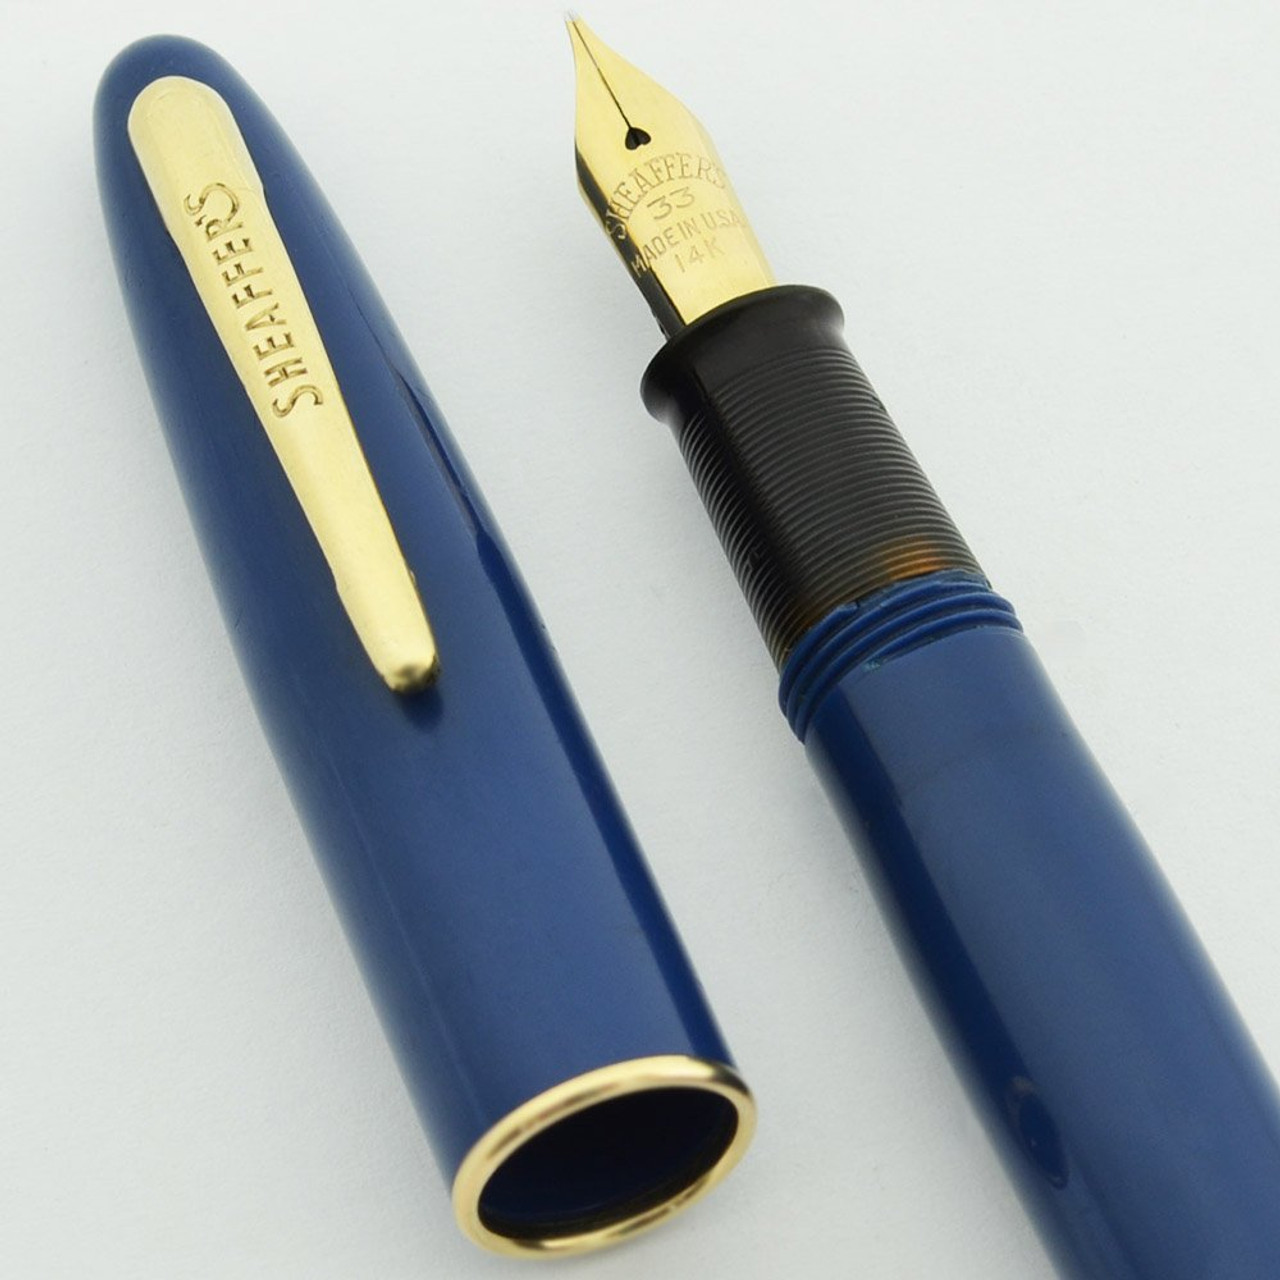 Sheaffer Craftsman Touchdown Fountain Pen - Persian Blue, #33 Fine 14k Nib (Excellent, Restored)